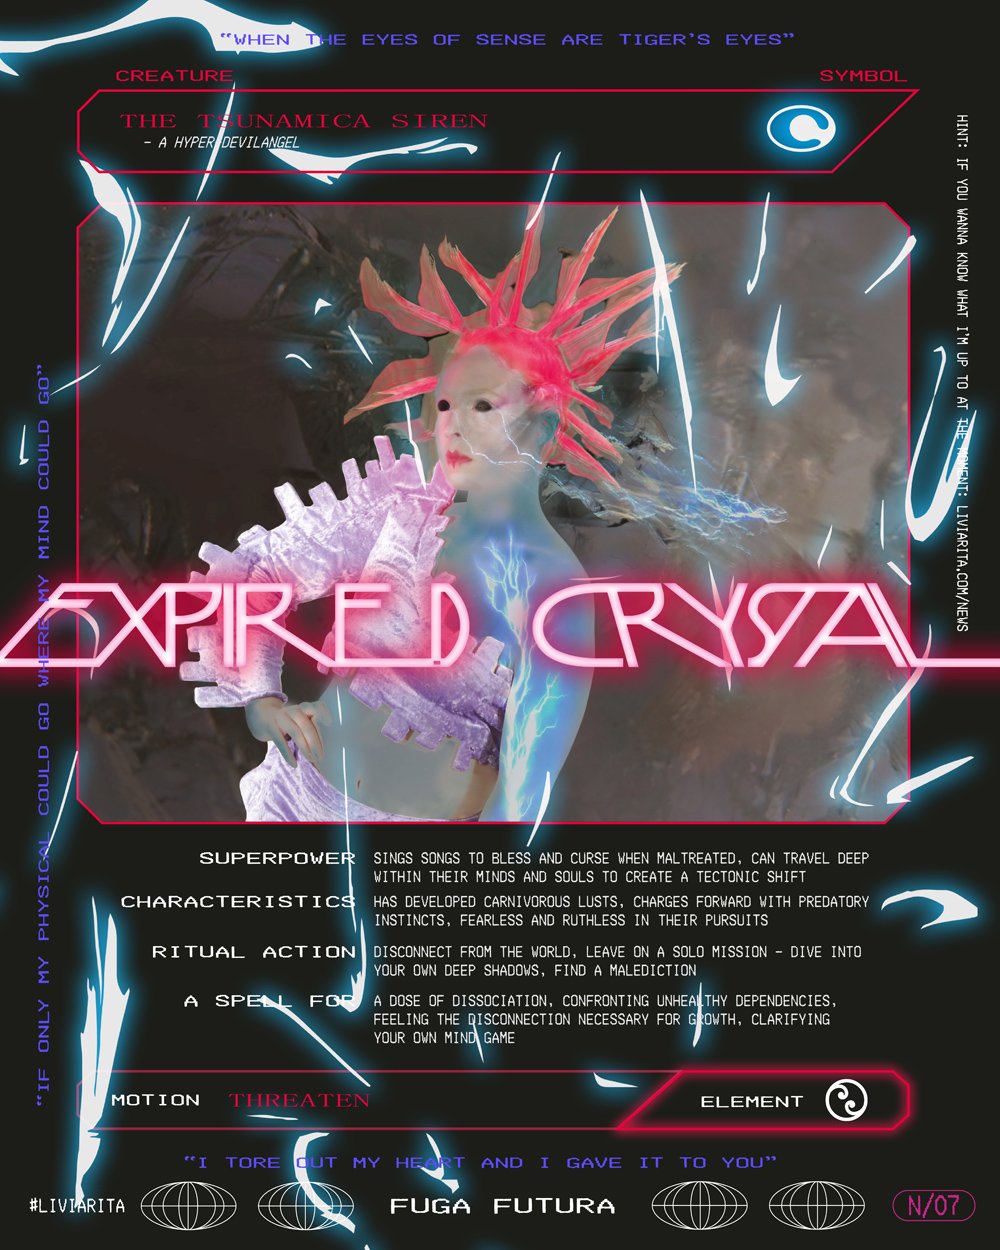 7 Expired Crystal.jpg